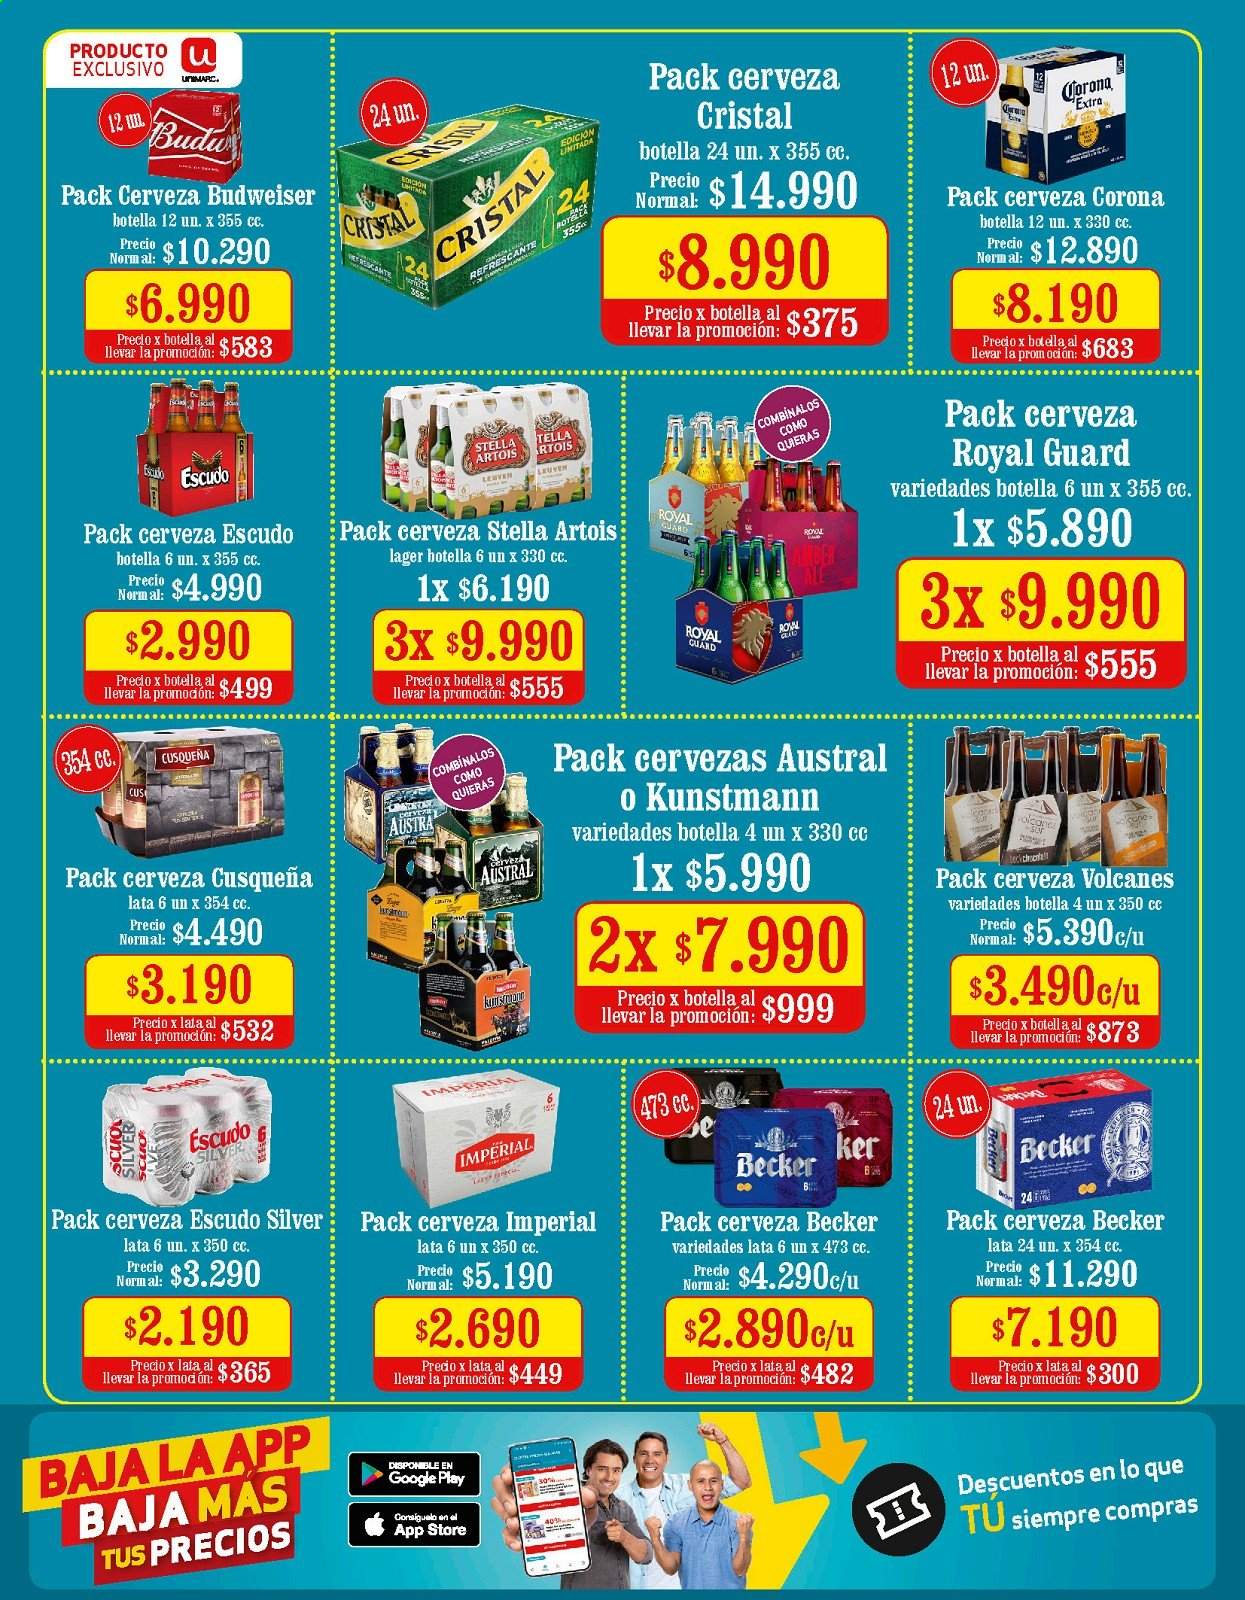 thumbnail - Catálogo Unimarc - 12.05.2021 - 15.06.2021 - Ventas - Budweiser, Stella Artois, Corona, cerveza Cristal, cerveza Imperial, cerveza. Página 17.